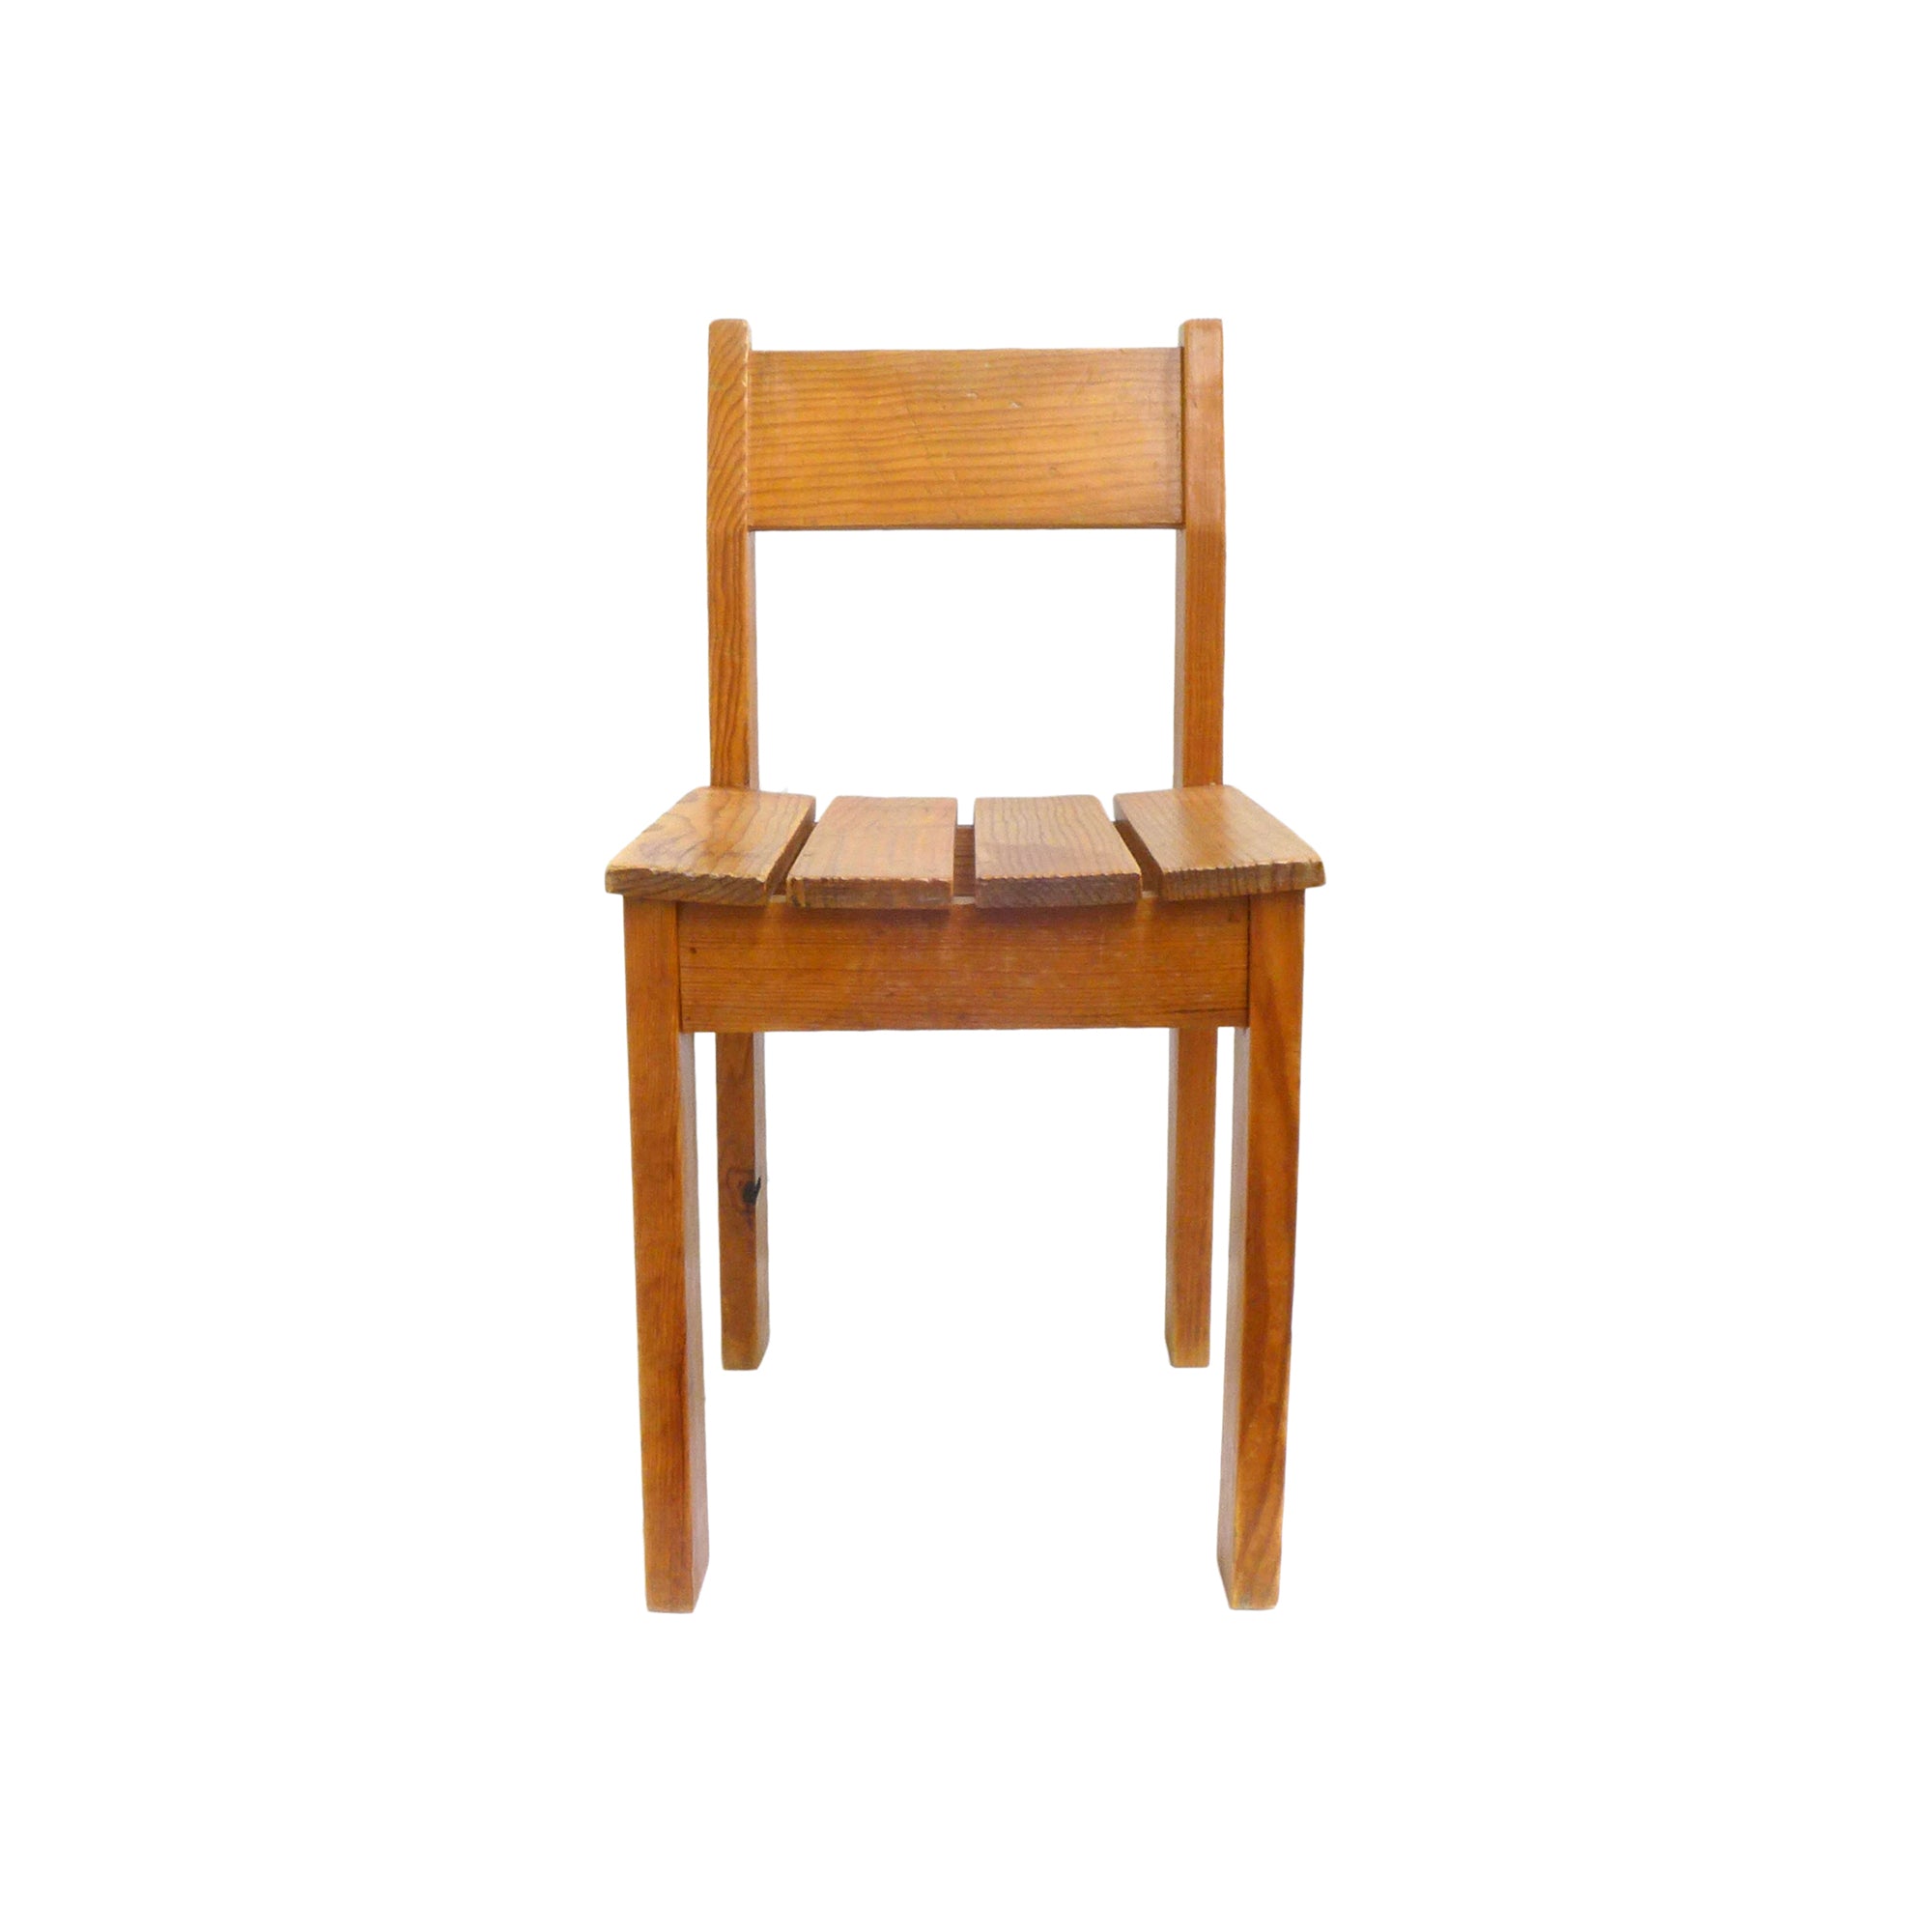 Pair of European Wood Slat Dining Chairs